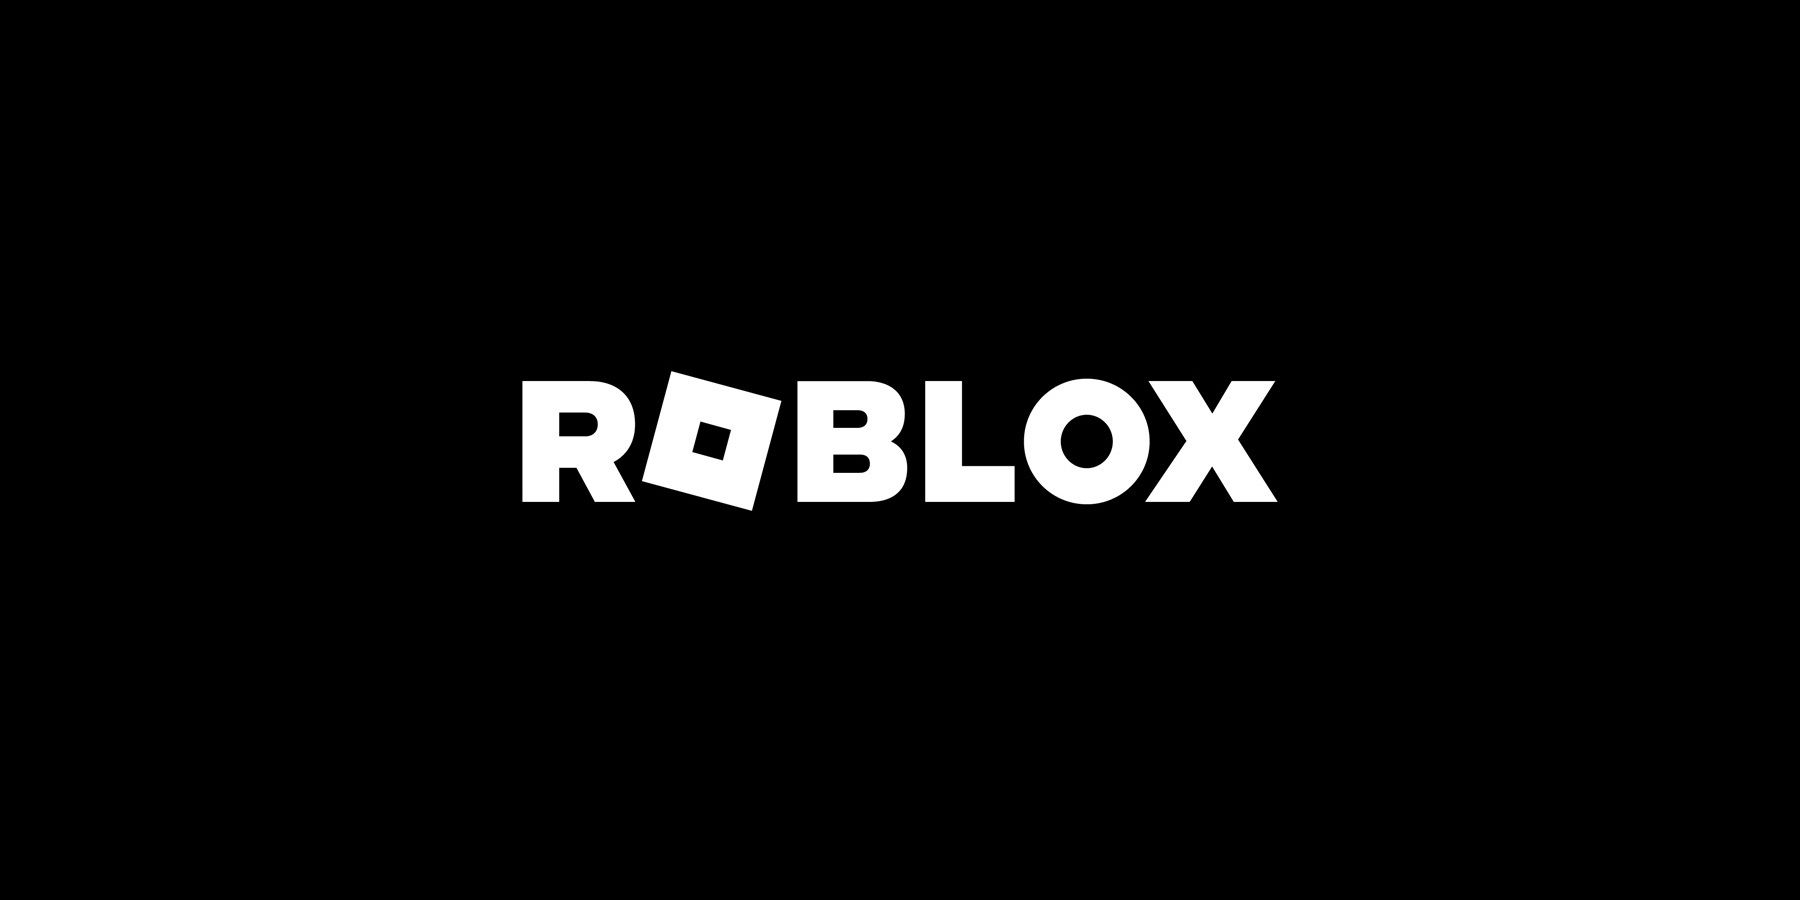 Roblox faces a new class action lawsuit alleging it facilitates